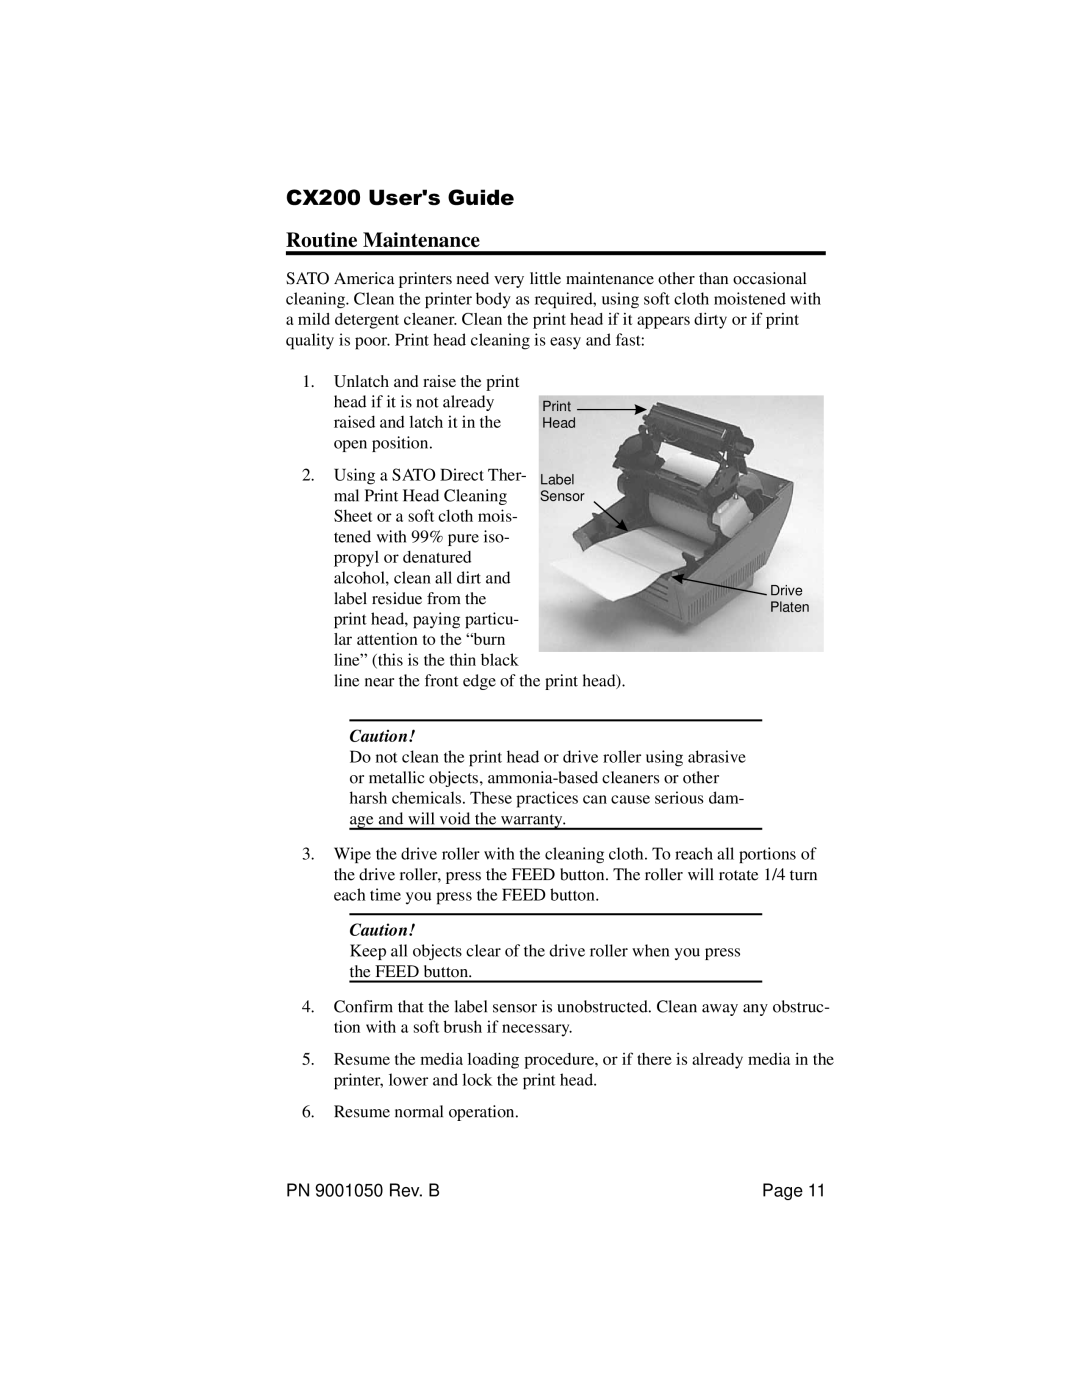 SATO manual Routine Maintenance, CX200 Users Guide 